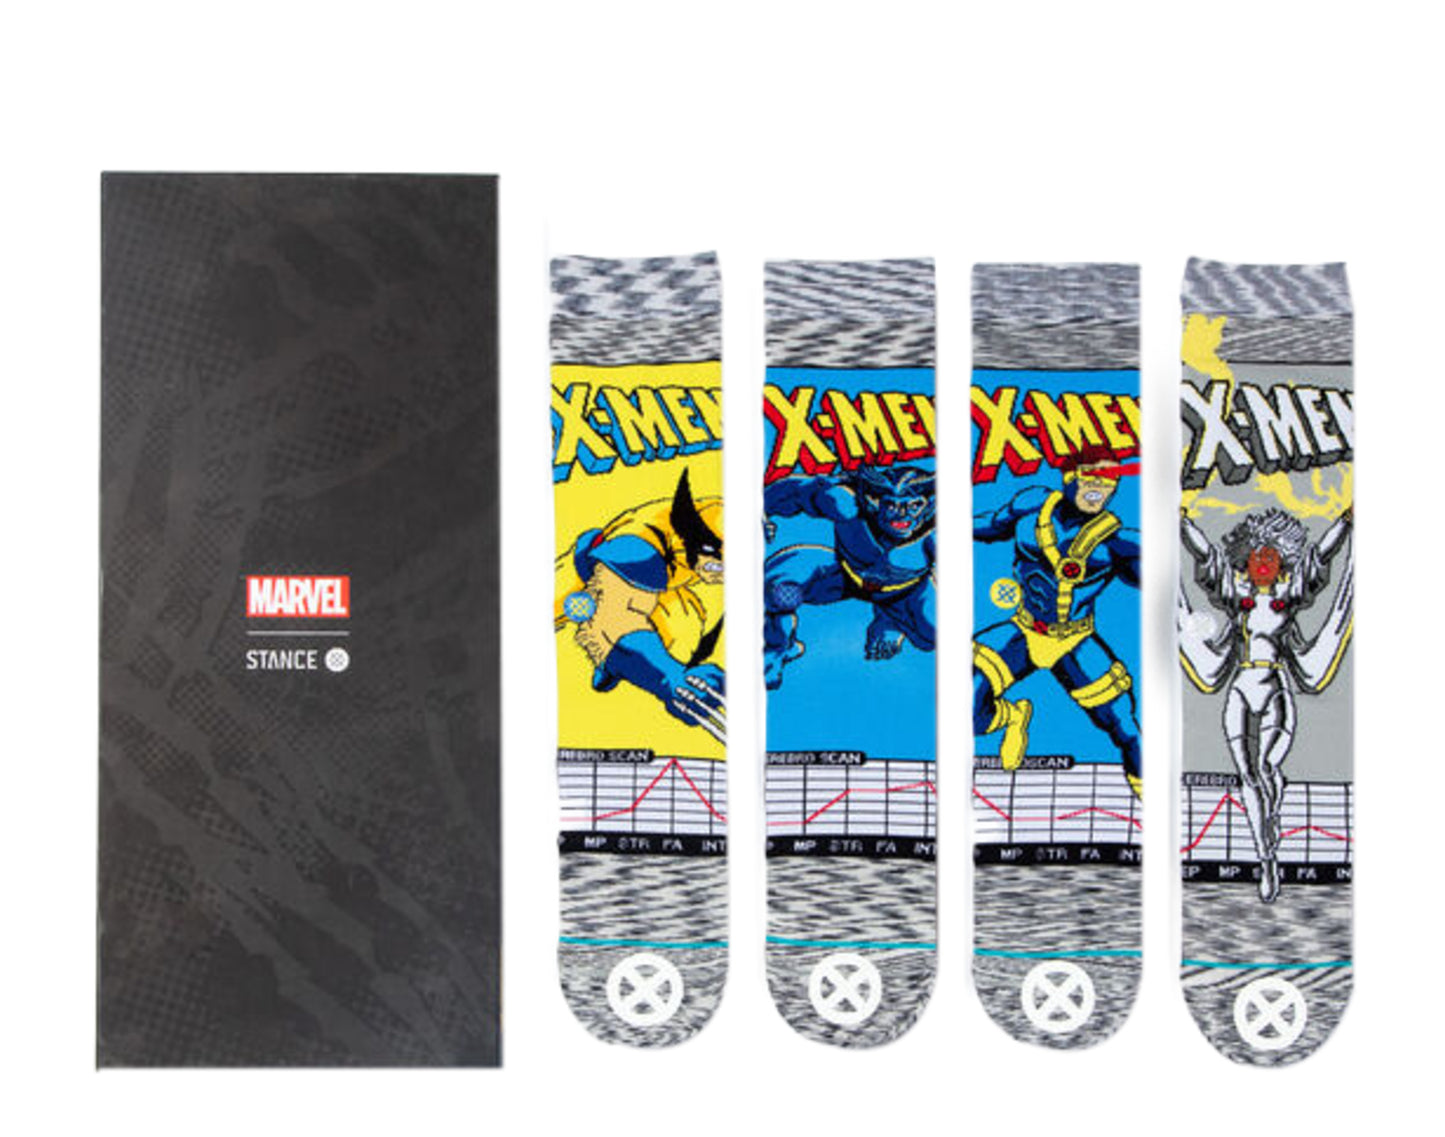 Stance Mavel Classic X-Men Comic 4-Pack Box Set Crew Socks